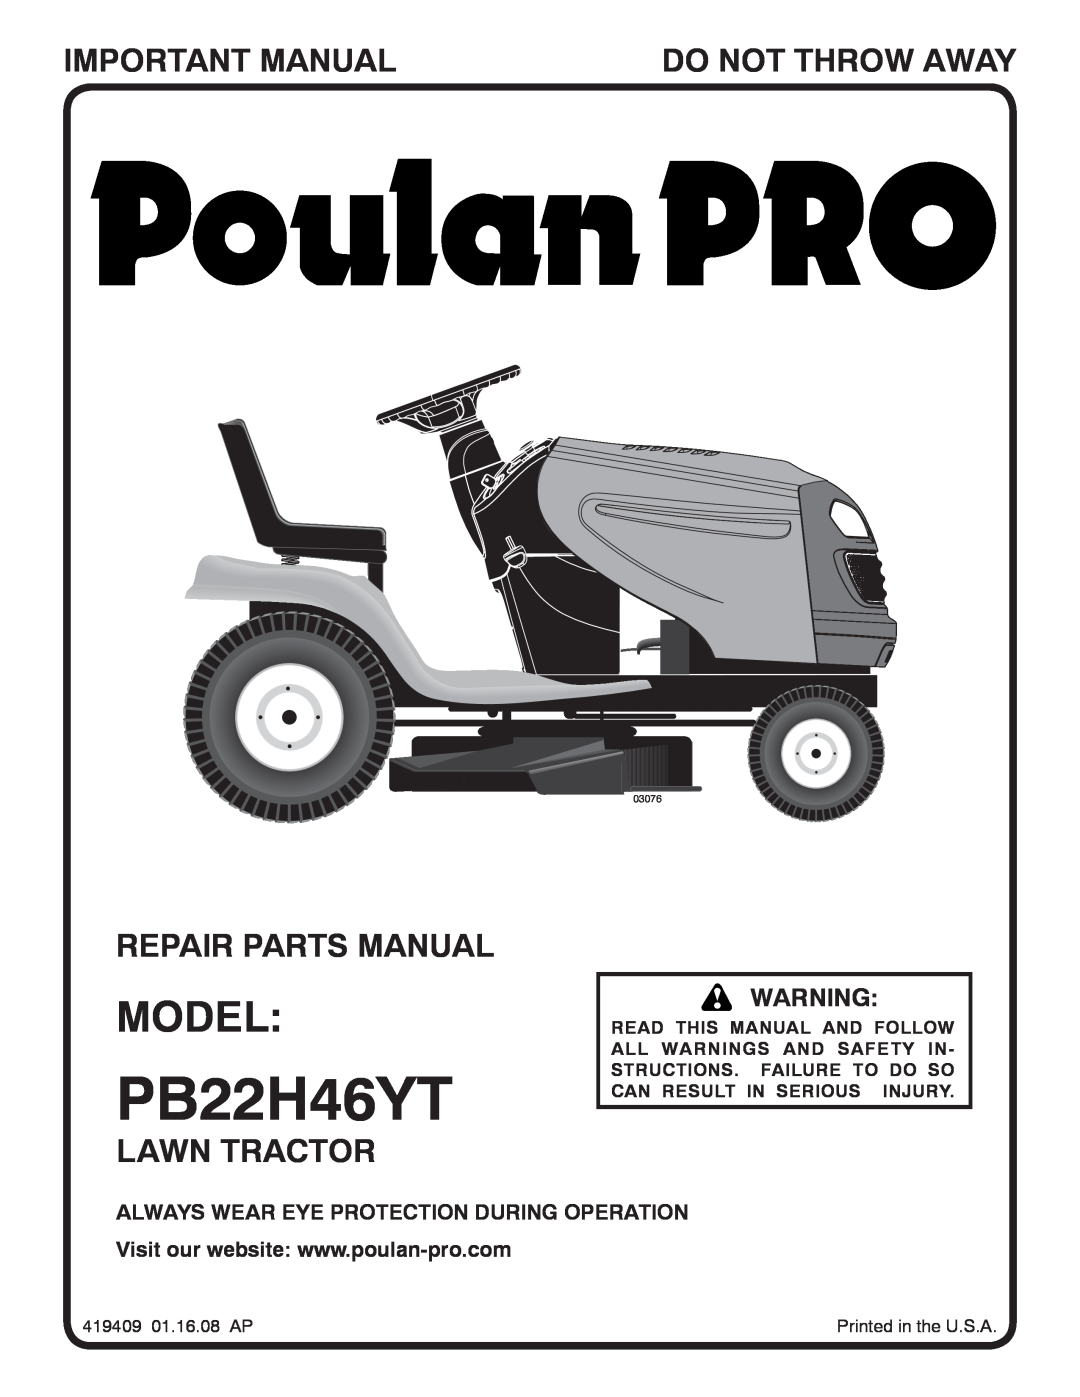 Poulan 960 42 00-38 manual Model, Important Manual, Do Not Throw Away, Repair Parts Manual, Lawn Tractor, PB22H46YT, 03076 